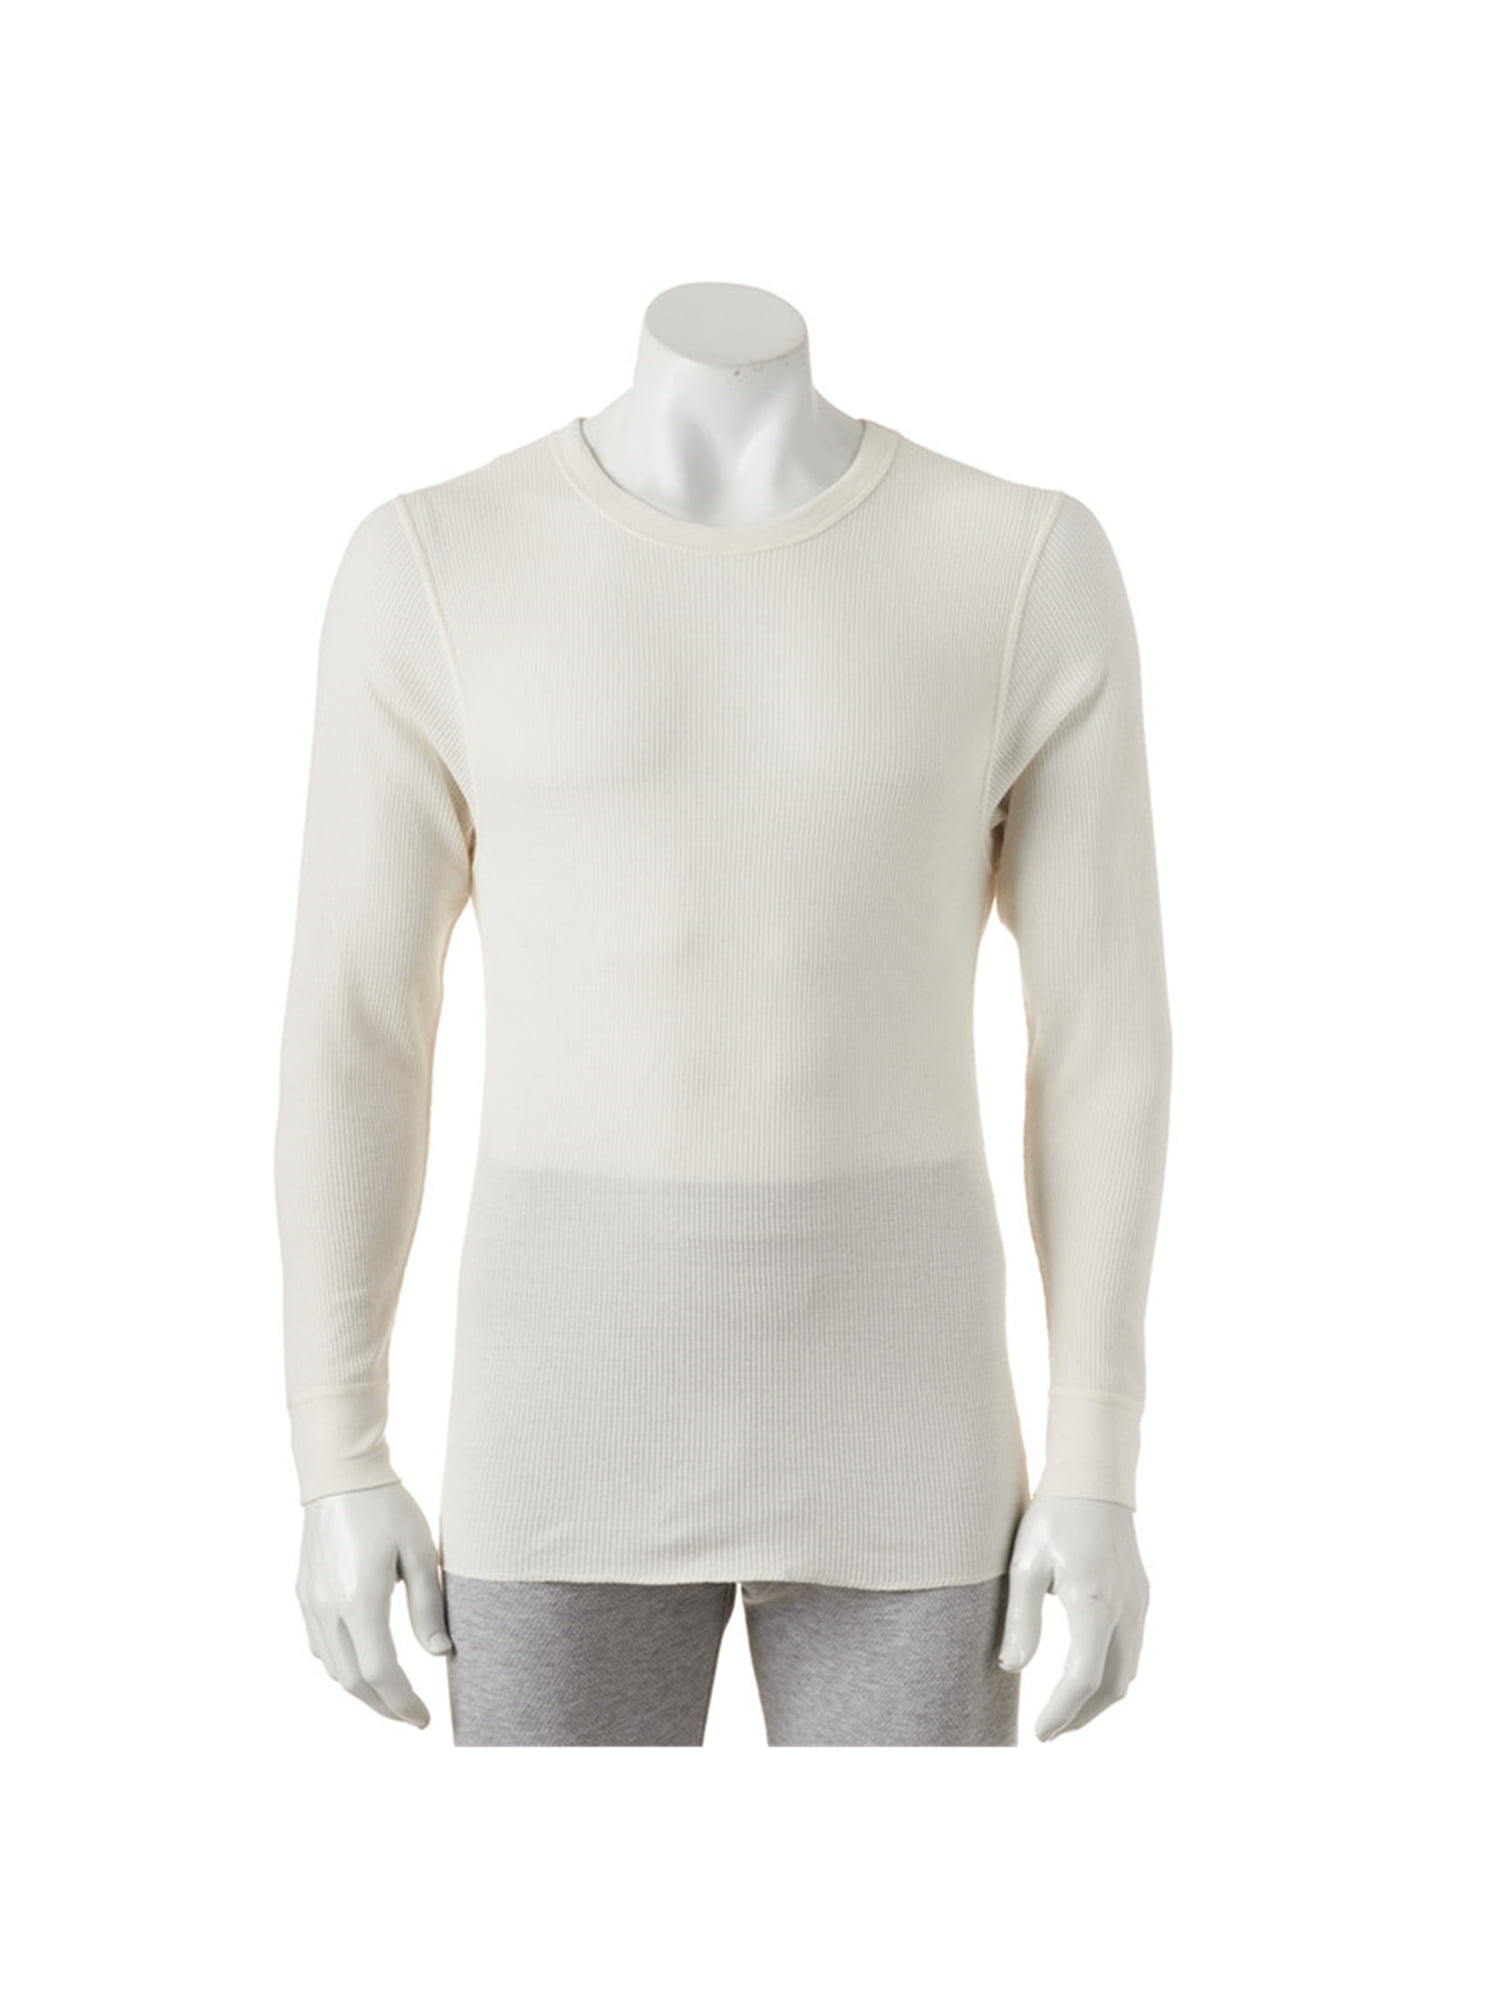 Hanes Mens Ultimate X-Temp Thermal Pajama Shirt white M | Walmart Canada